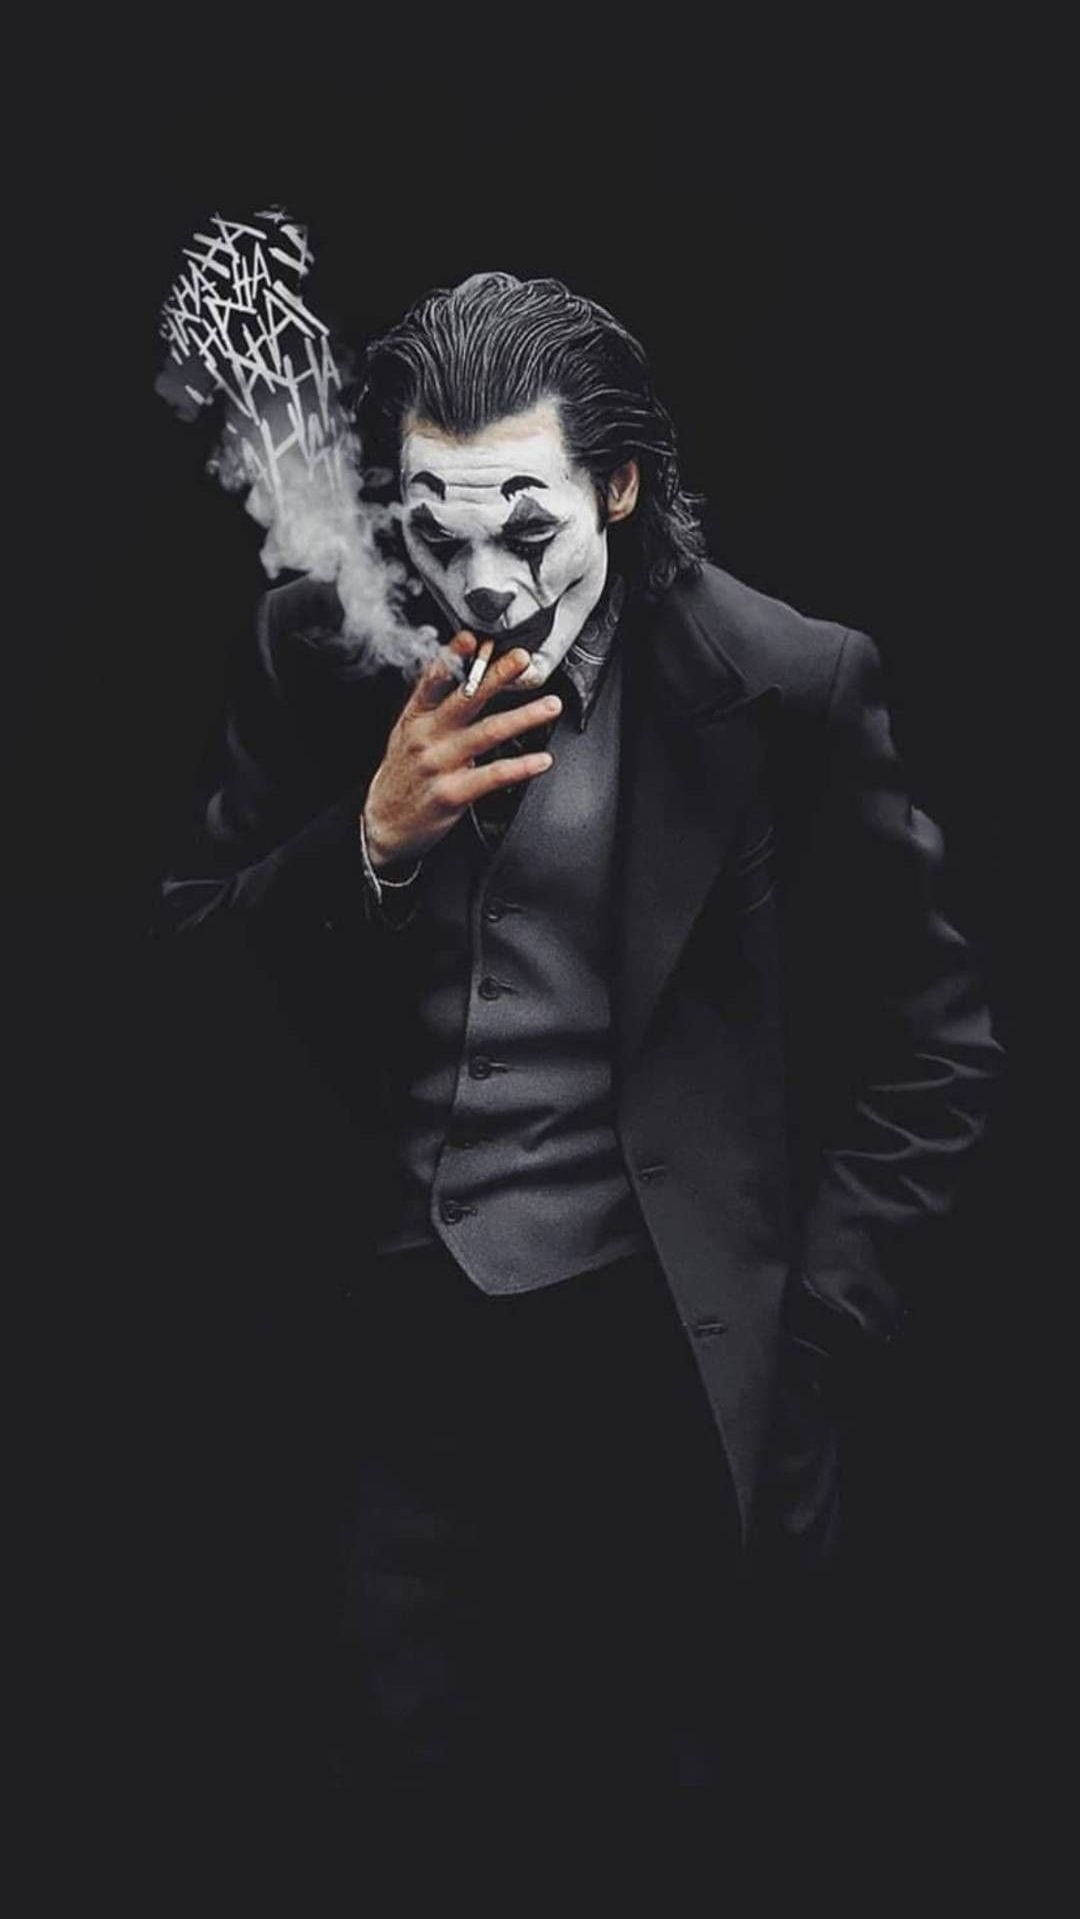 Sick Phone The Joker Smoking